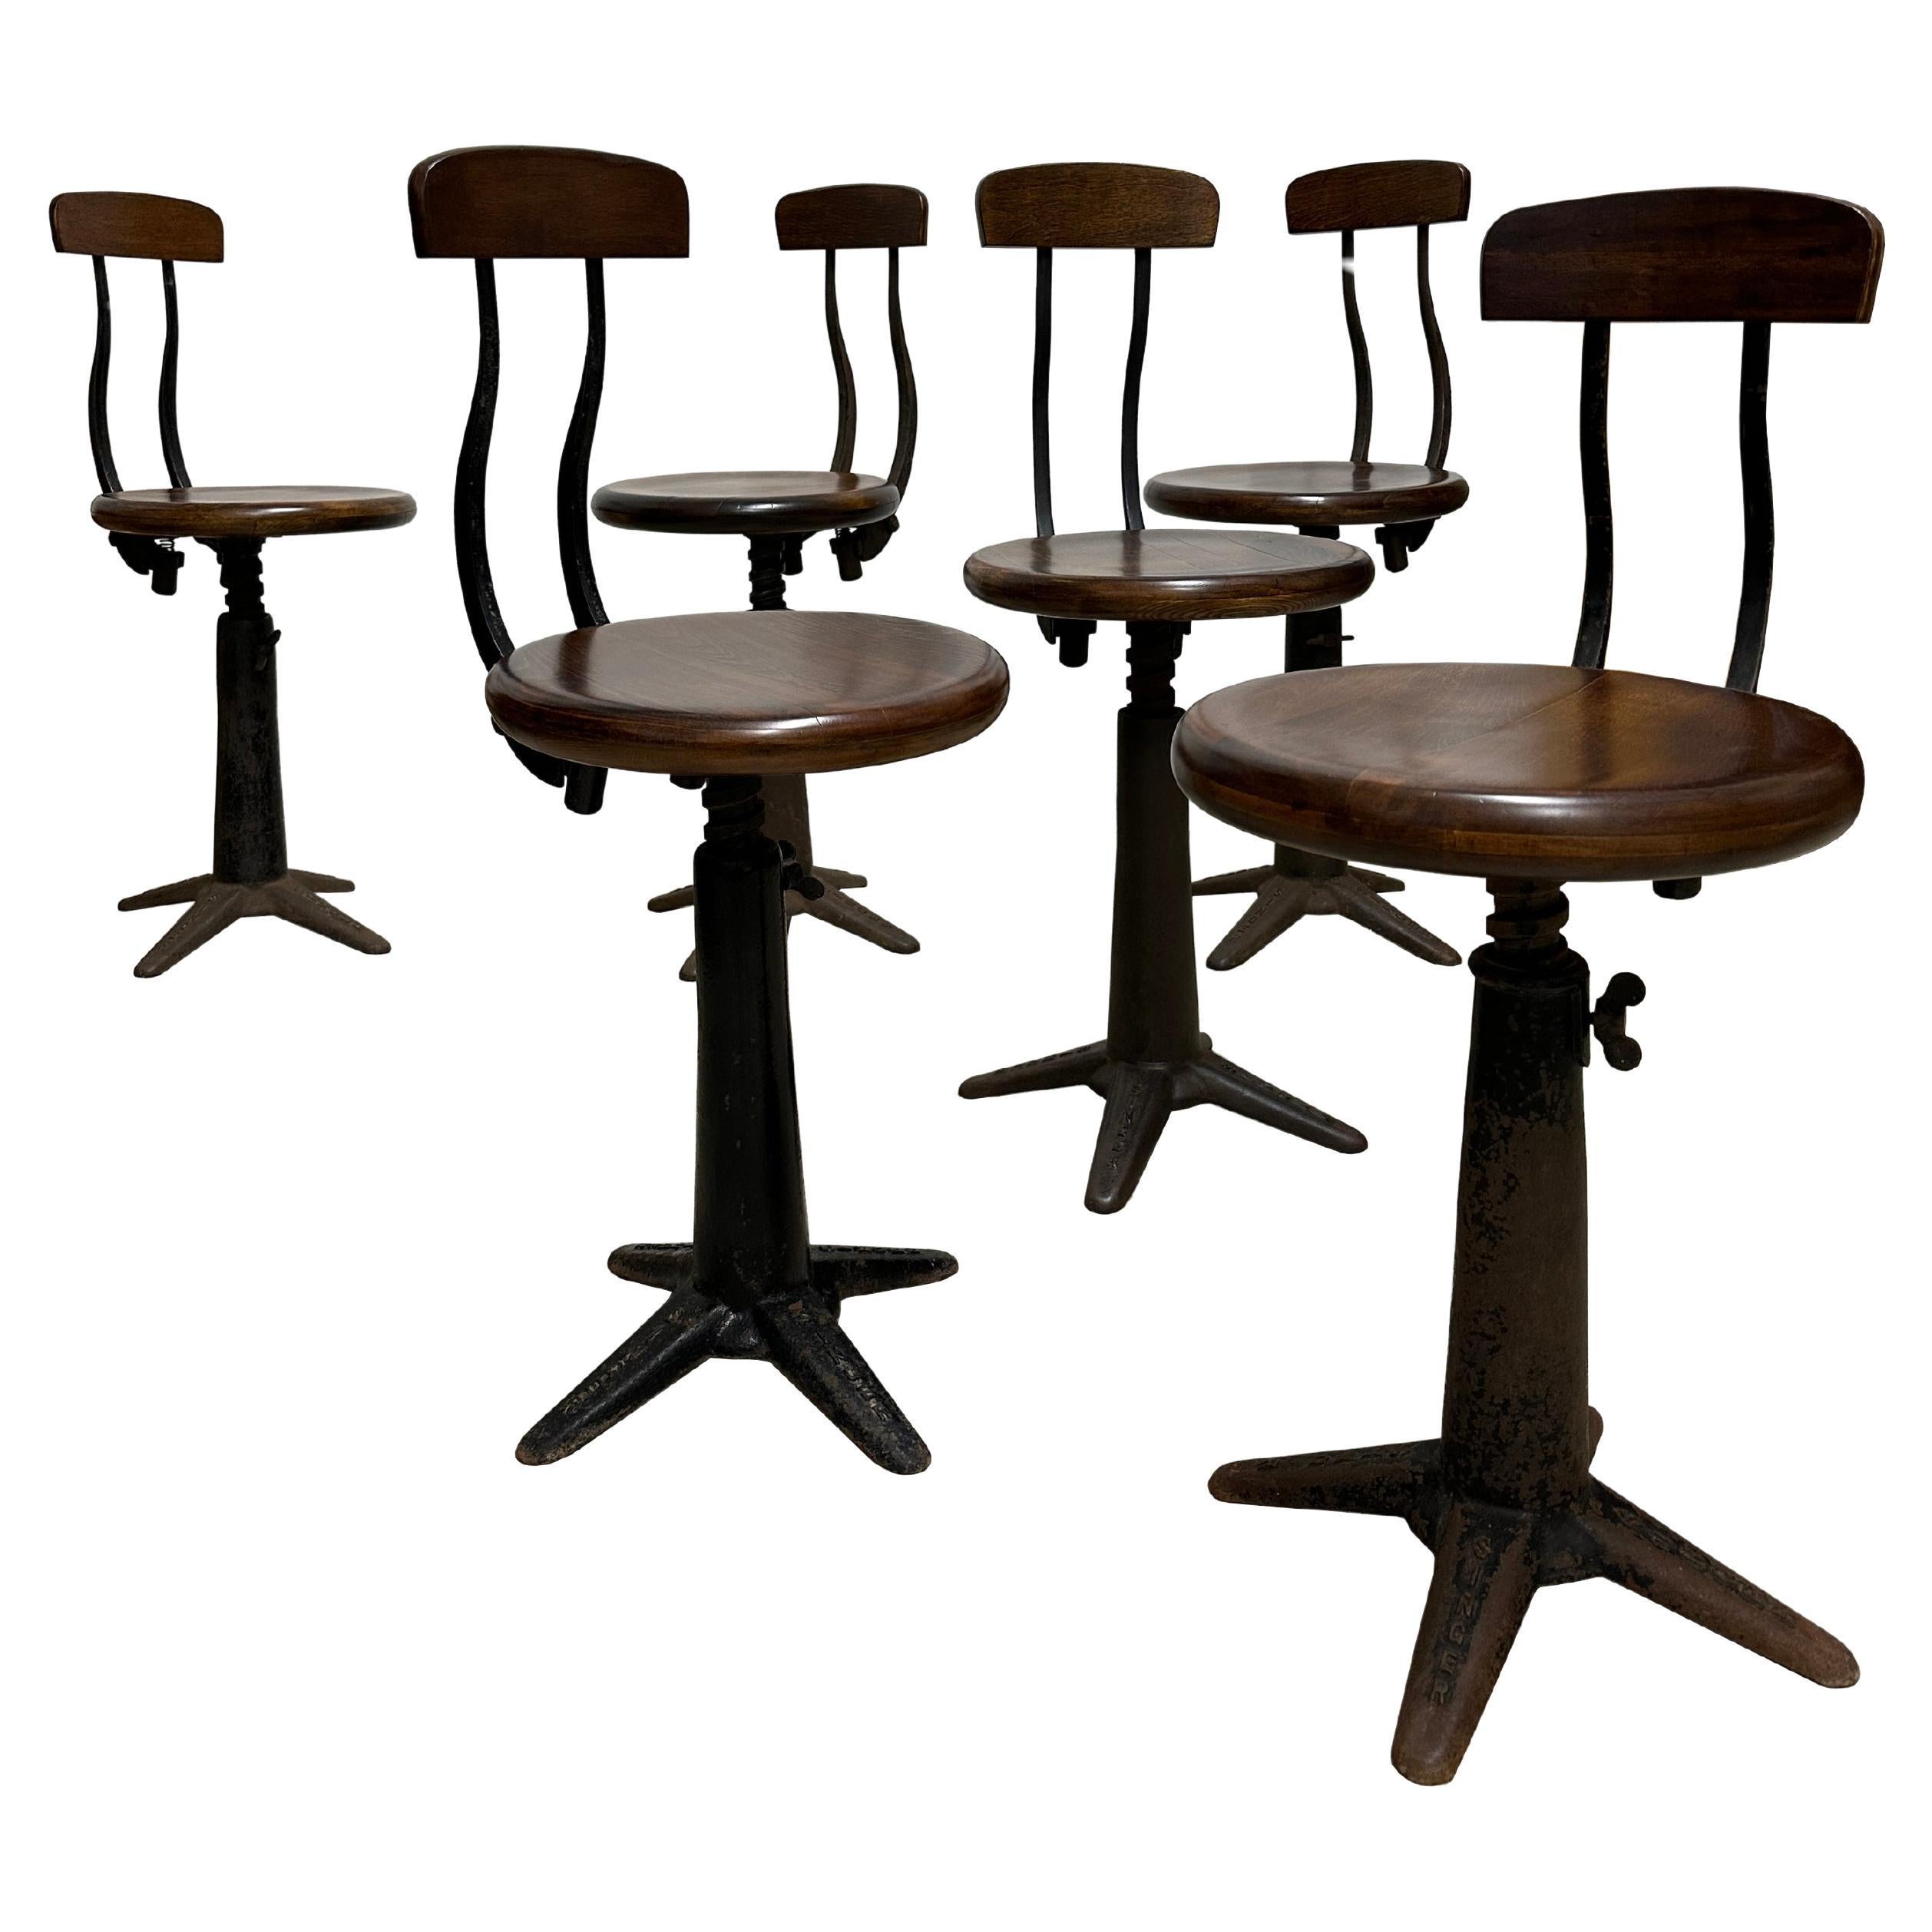 Set 6 Vintage Industrial Original Singer Sewing Spring Back Factory Chairs Stool For Sale